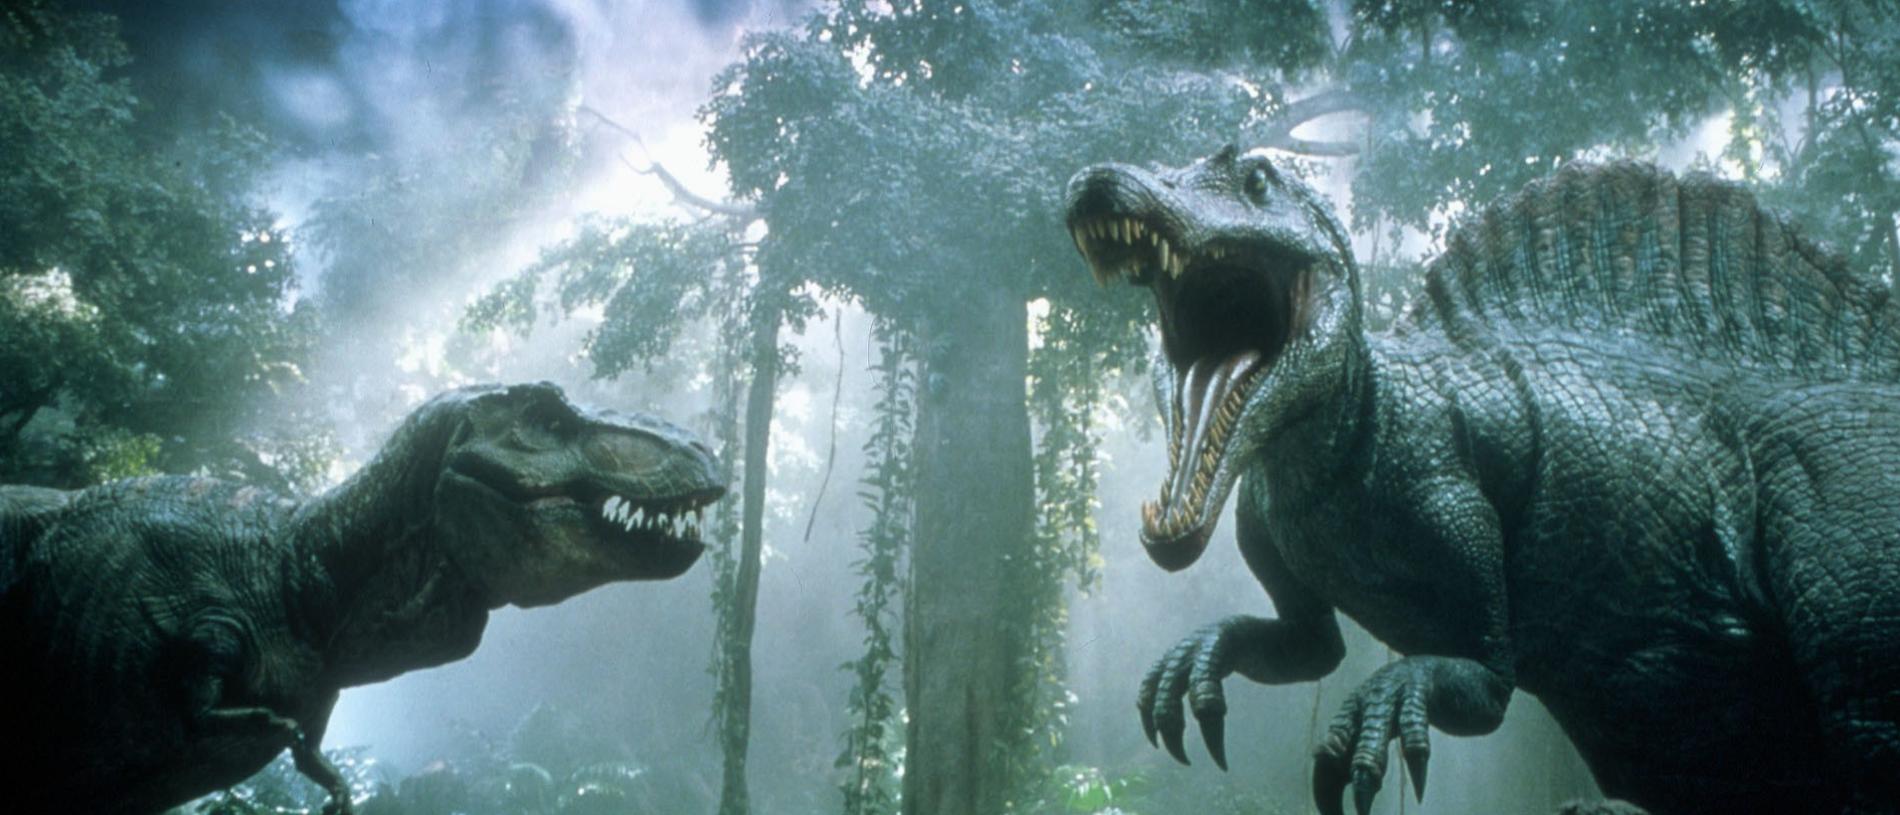 2001 : Velociraptor and Spinosaurus in scene from the 2001 film "Jurassic Park III".